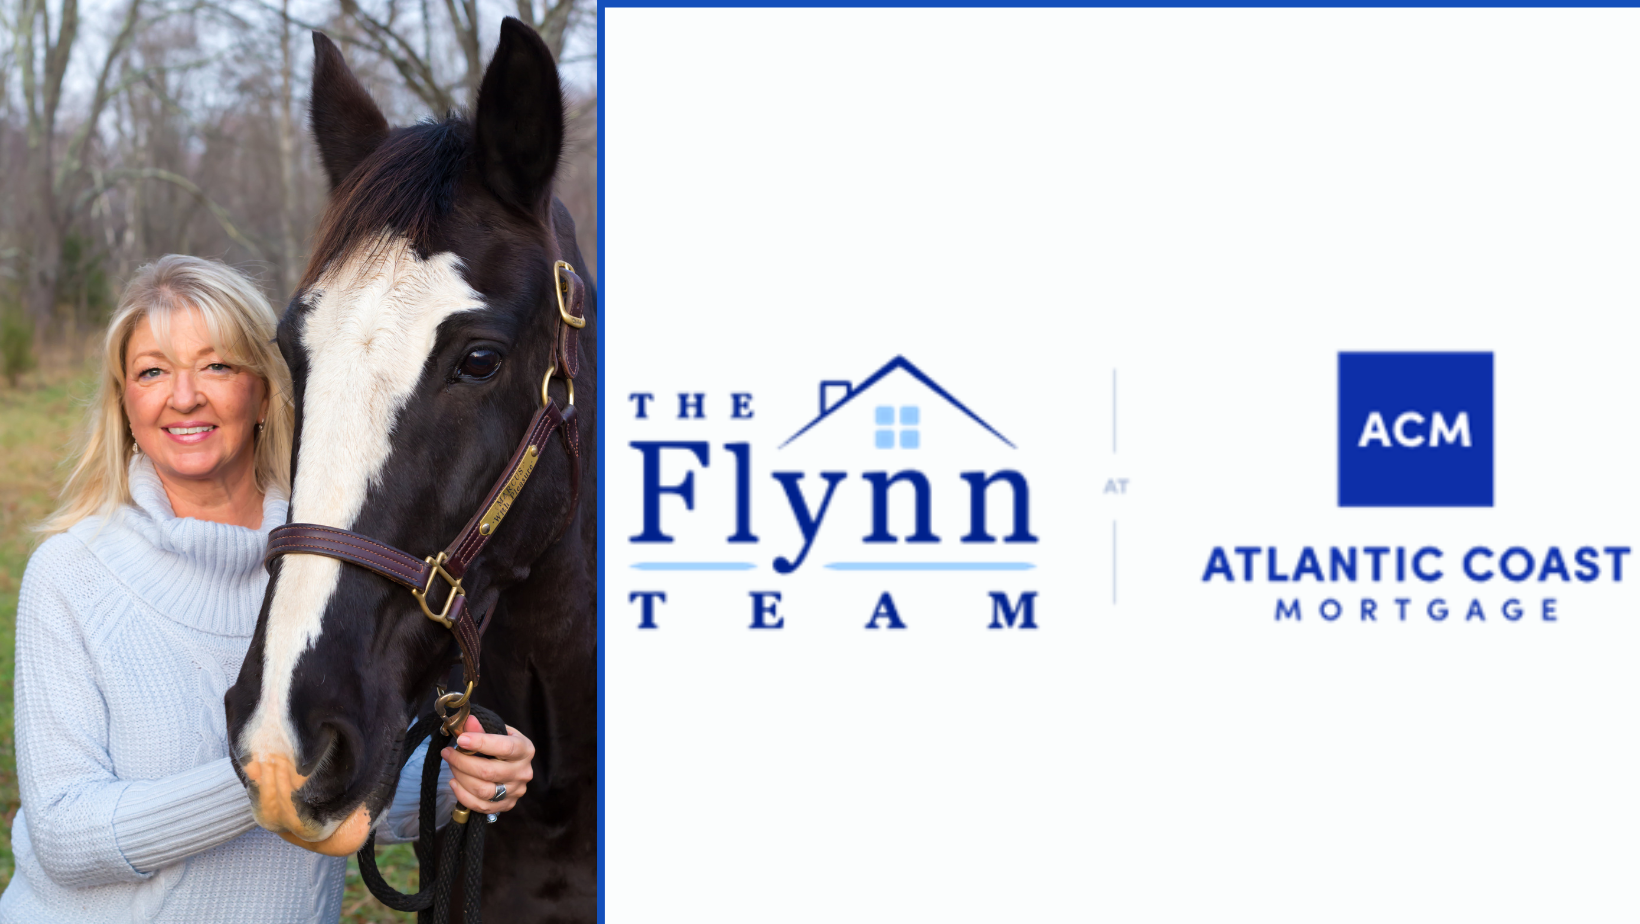 The Flynn Team- Atlantic Coast Mortgage